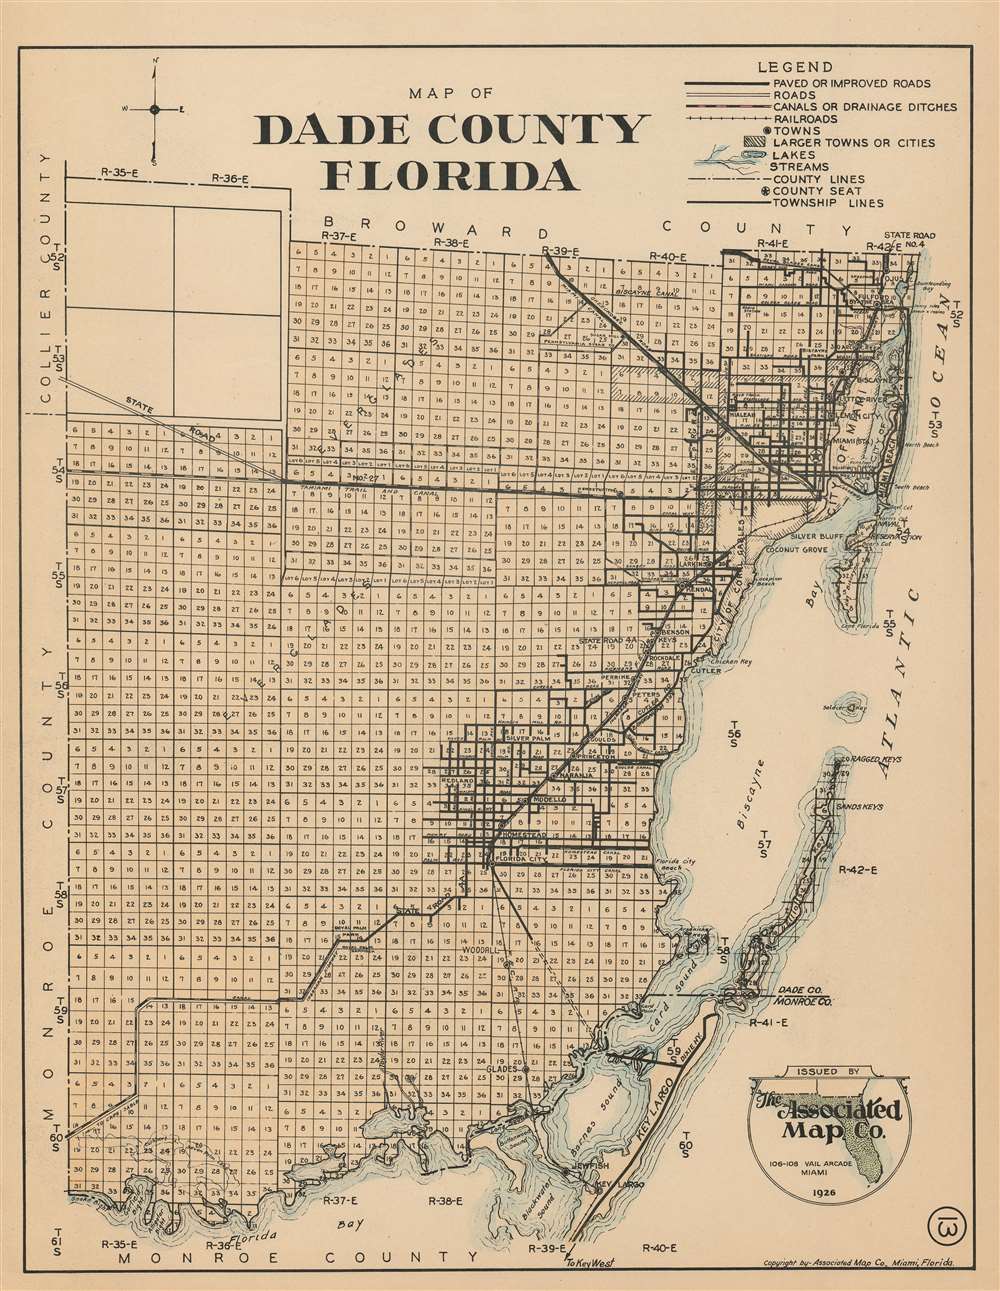 Map of Dade County Florida - Main View